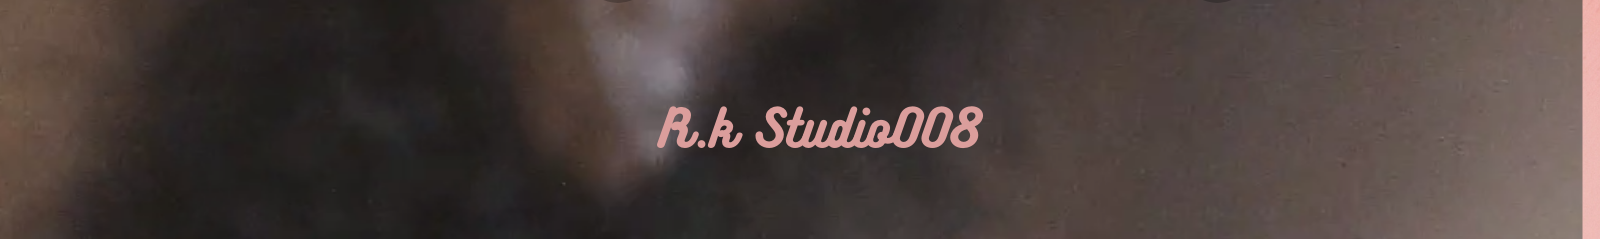 R.k studio 008